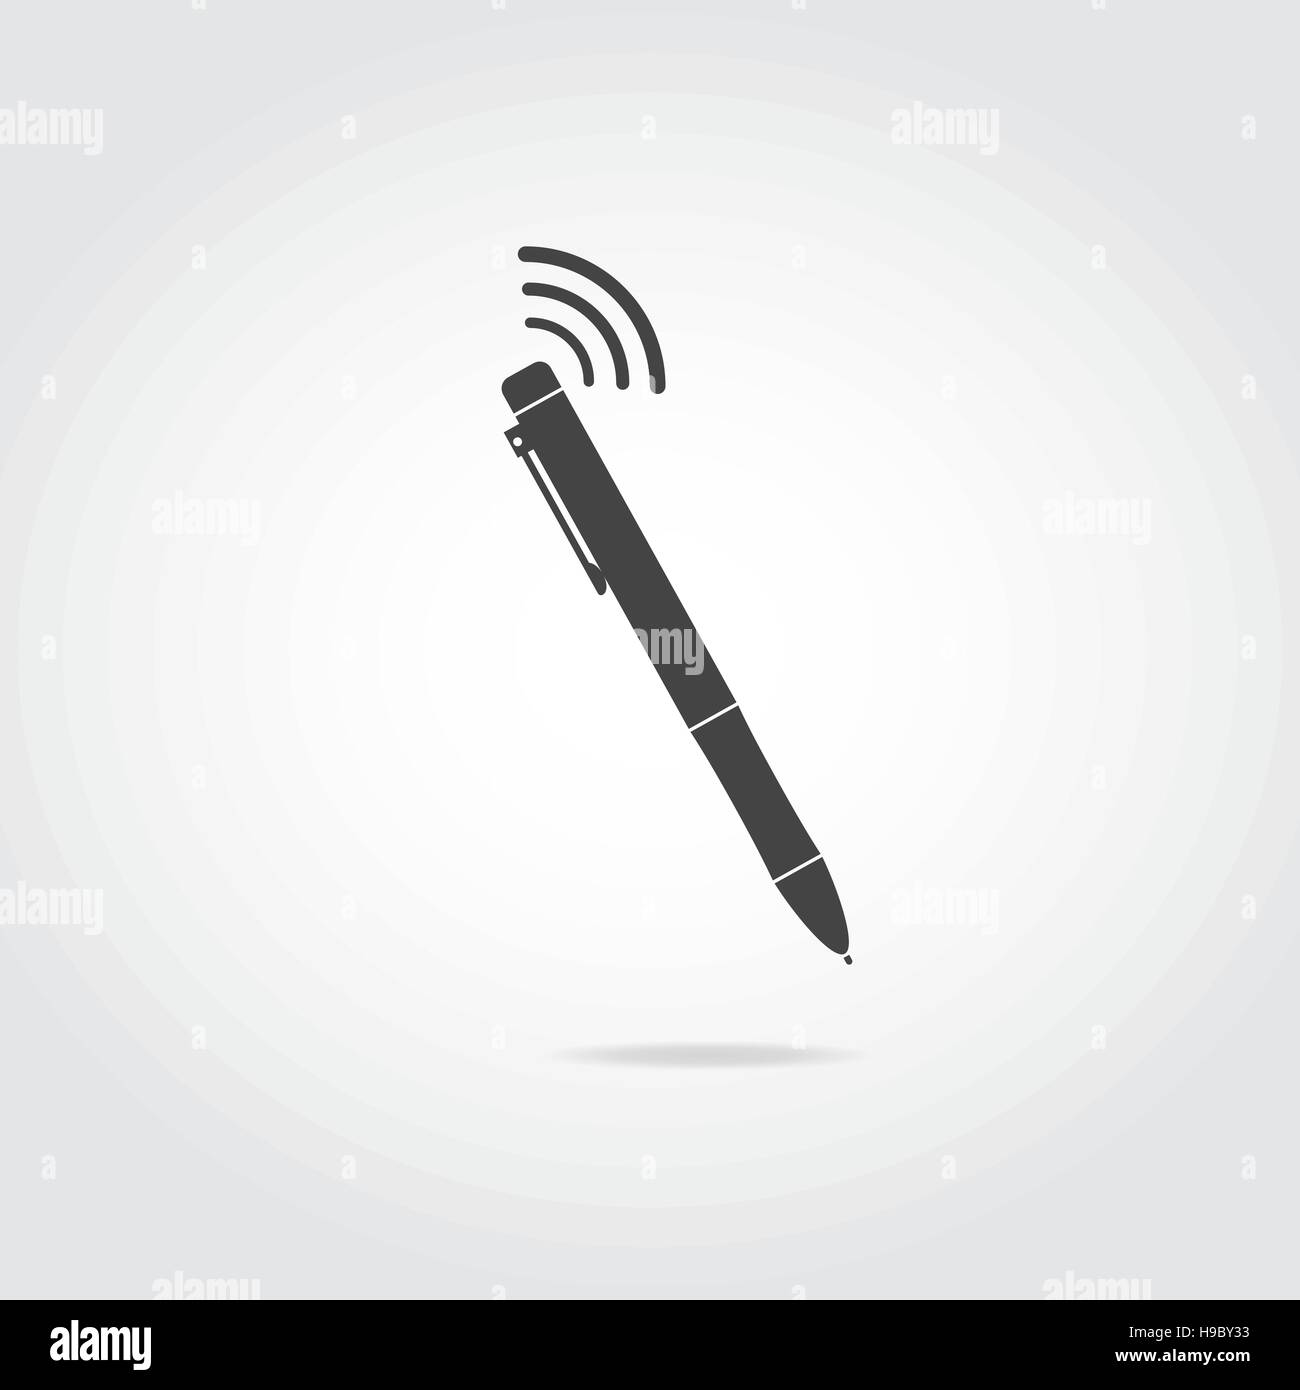 Spy pen with wi-fi. Black mechanical ball pen icon. Stock Vector